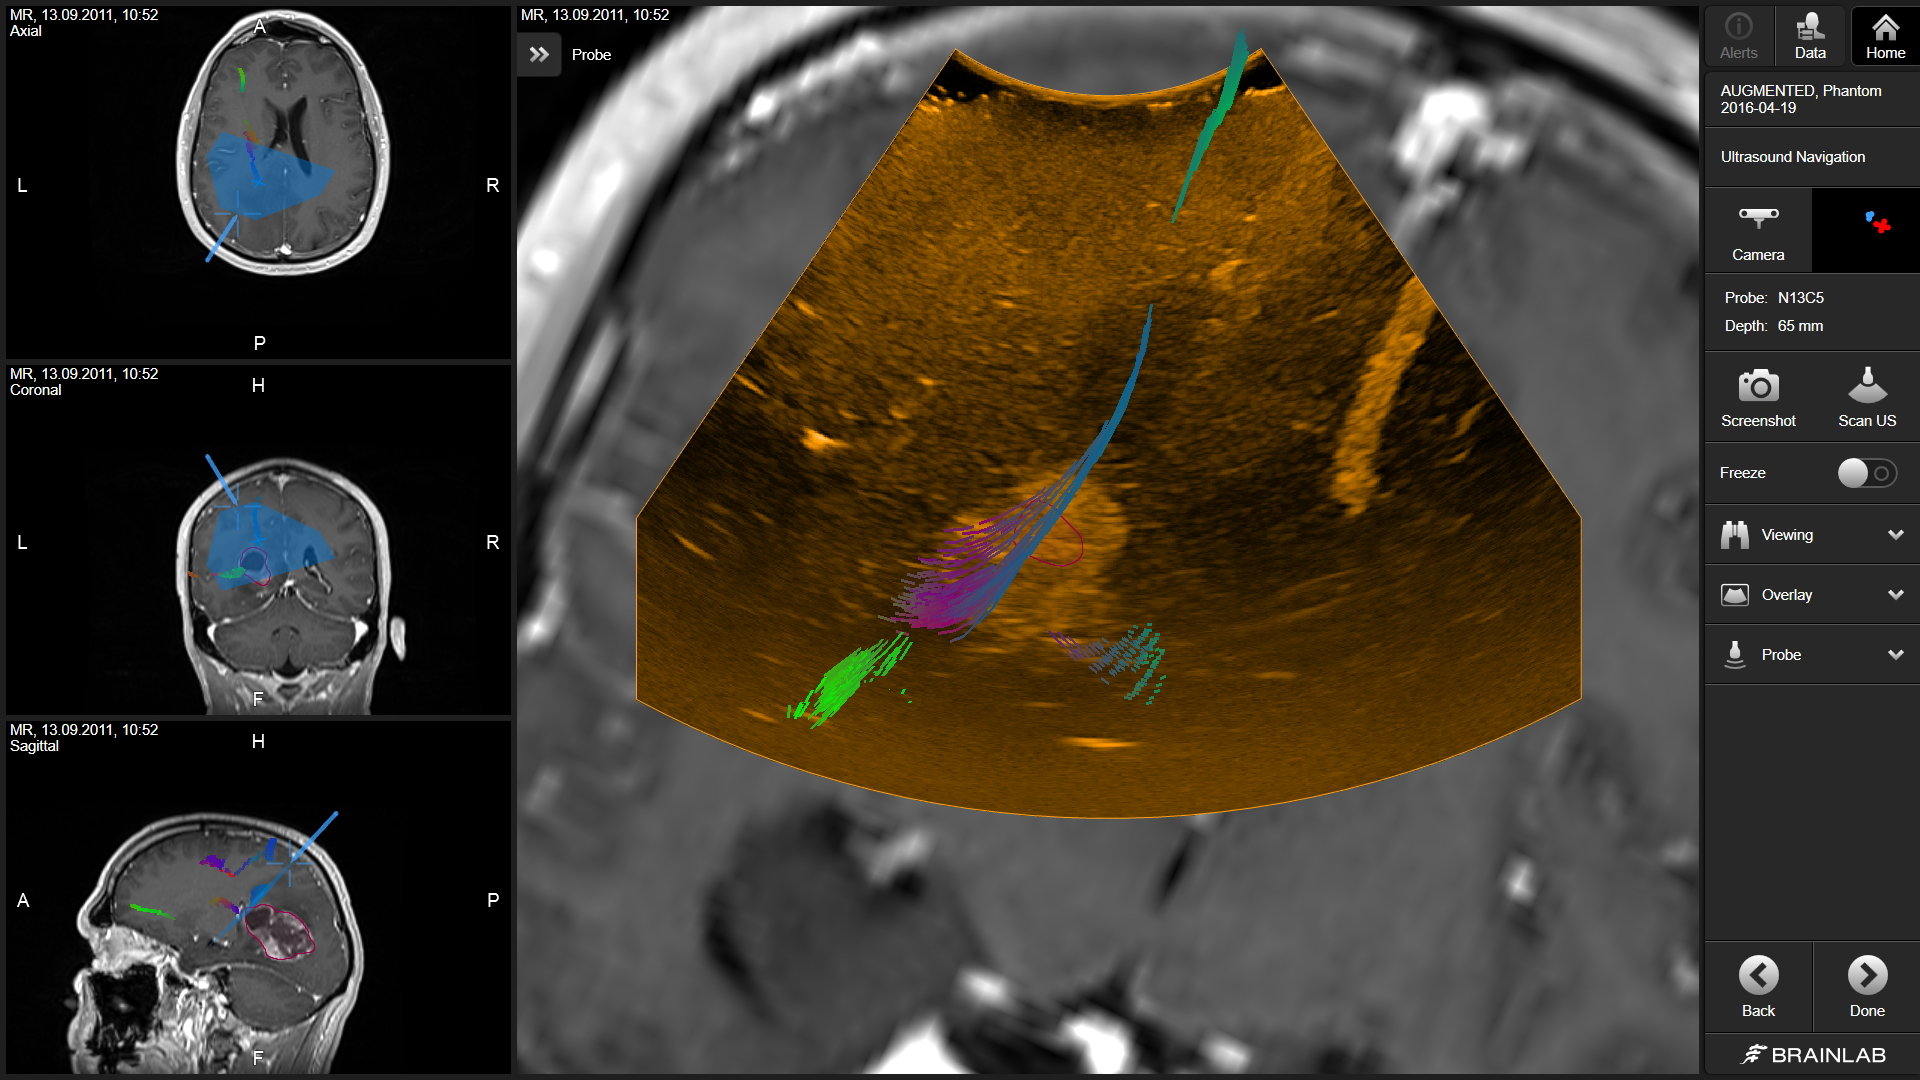 Ultrasound Navigation Software Screenshot: 2D Ultrasound image overlaid on MR image with fibers